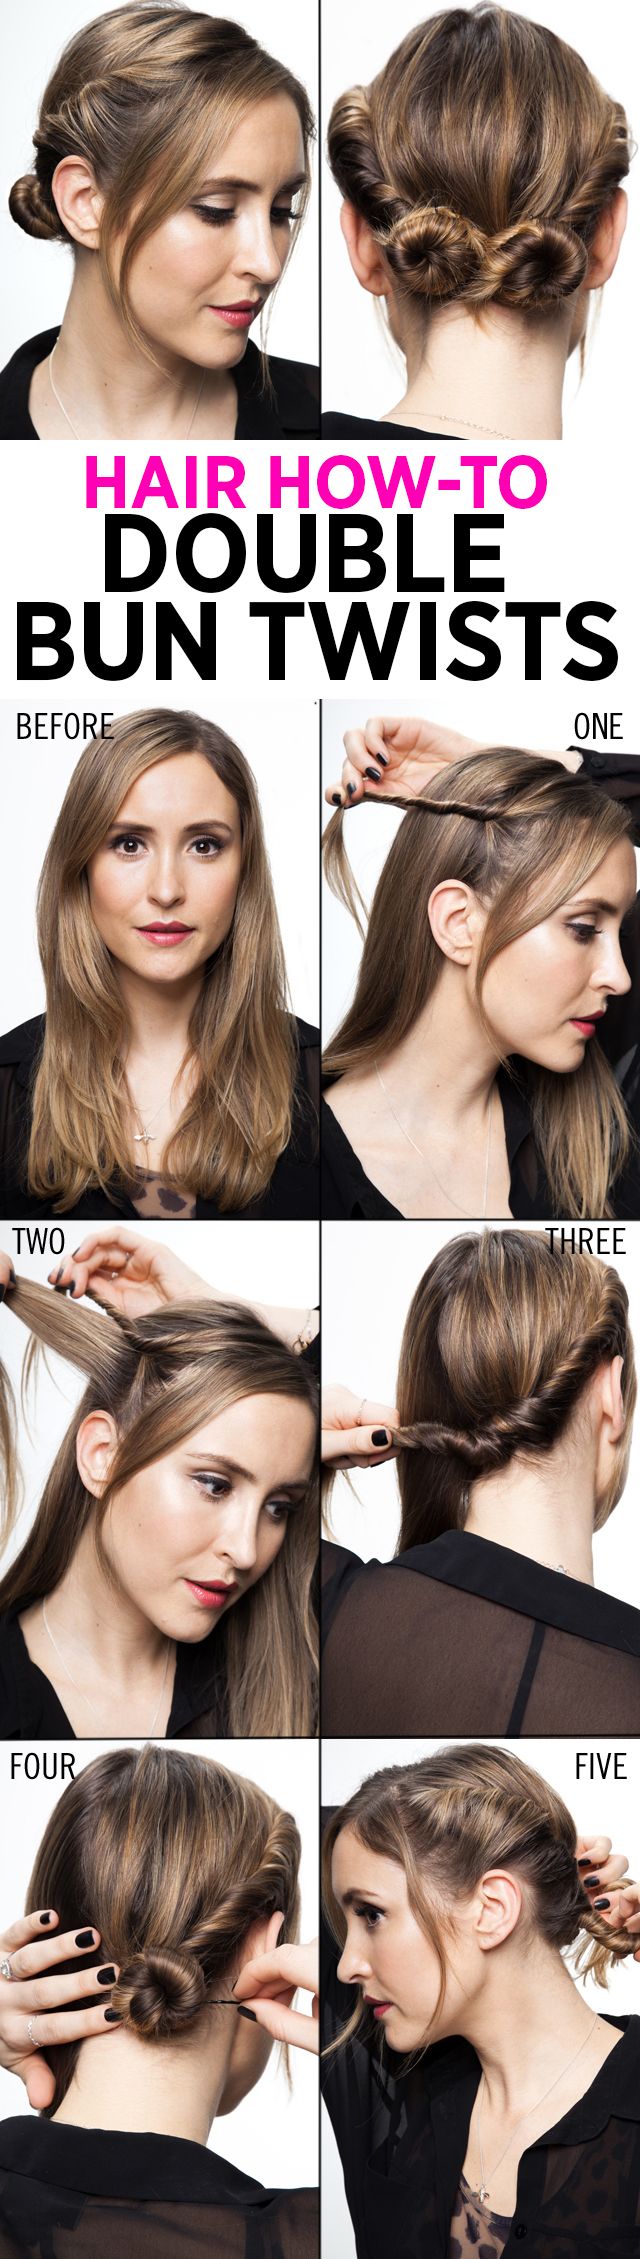 Hair how to double bun twists